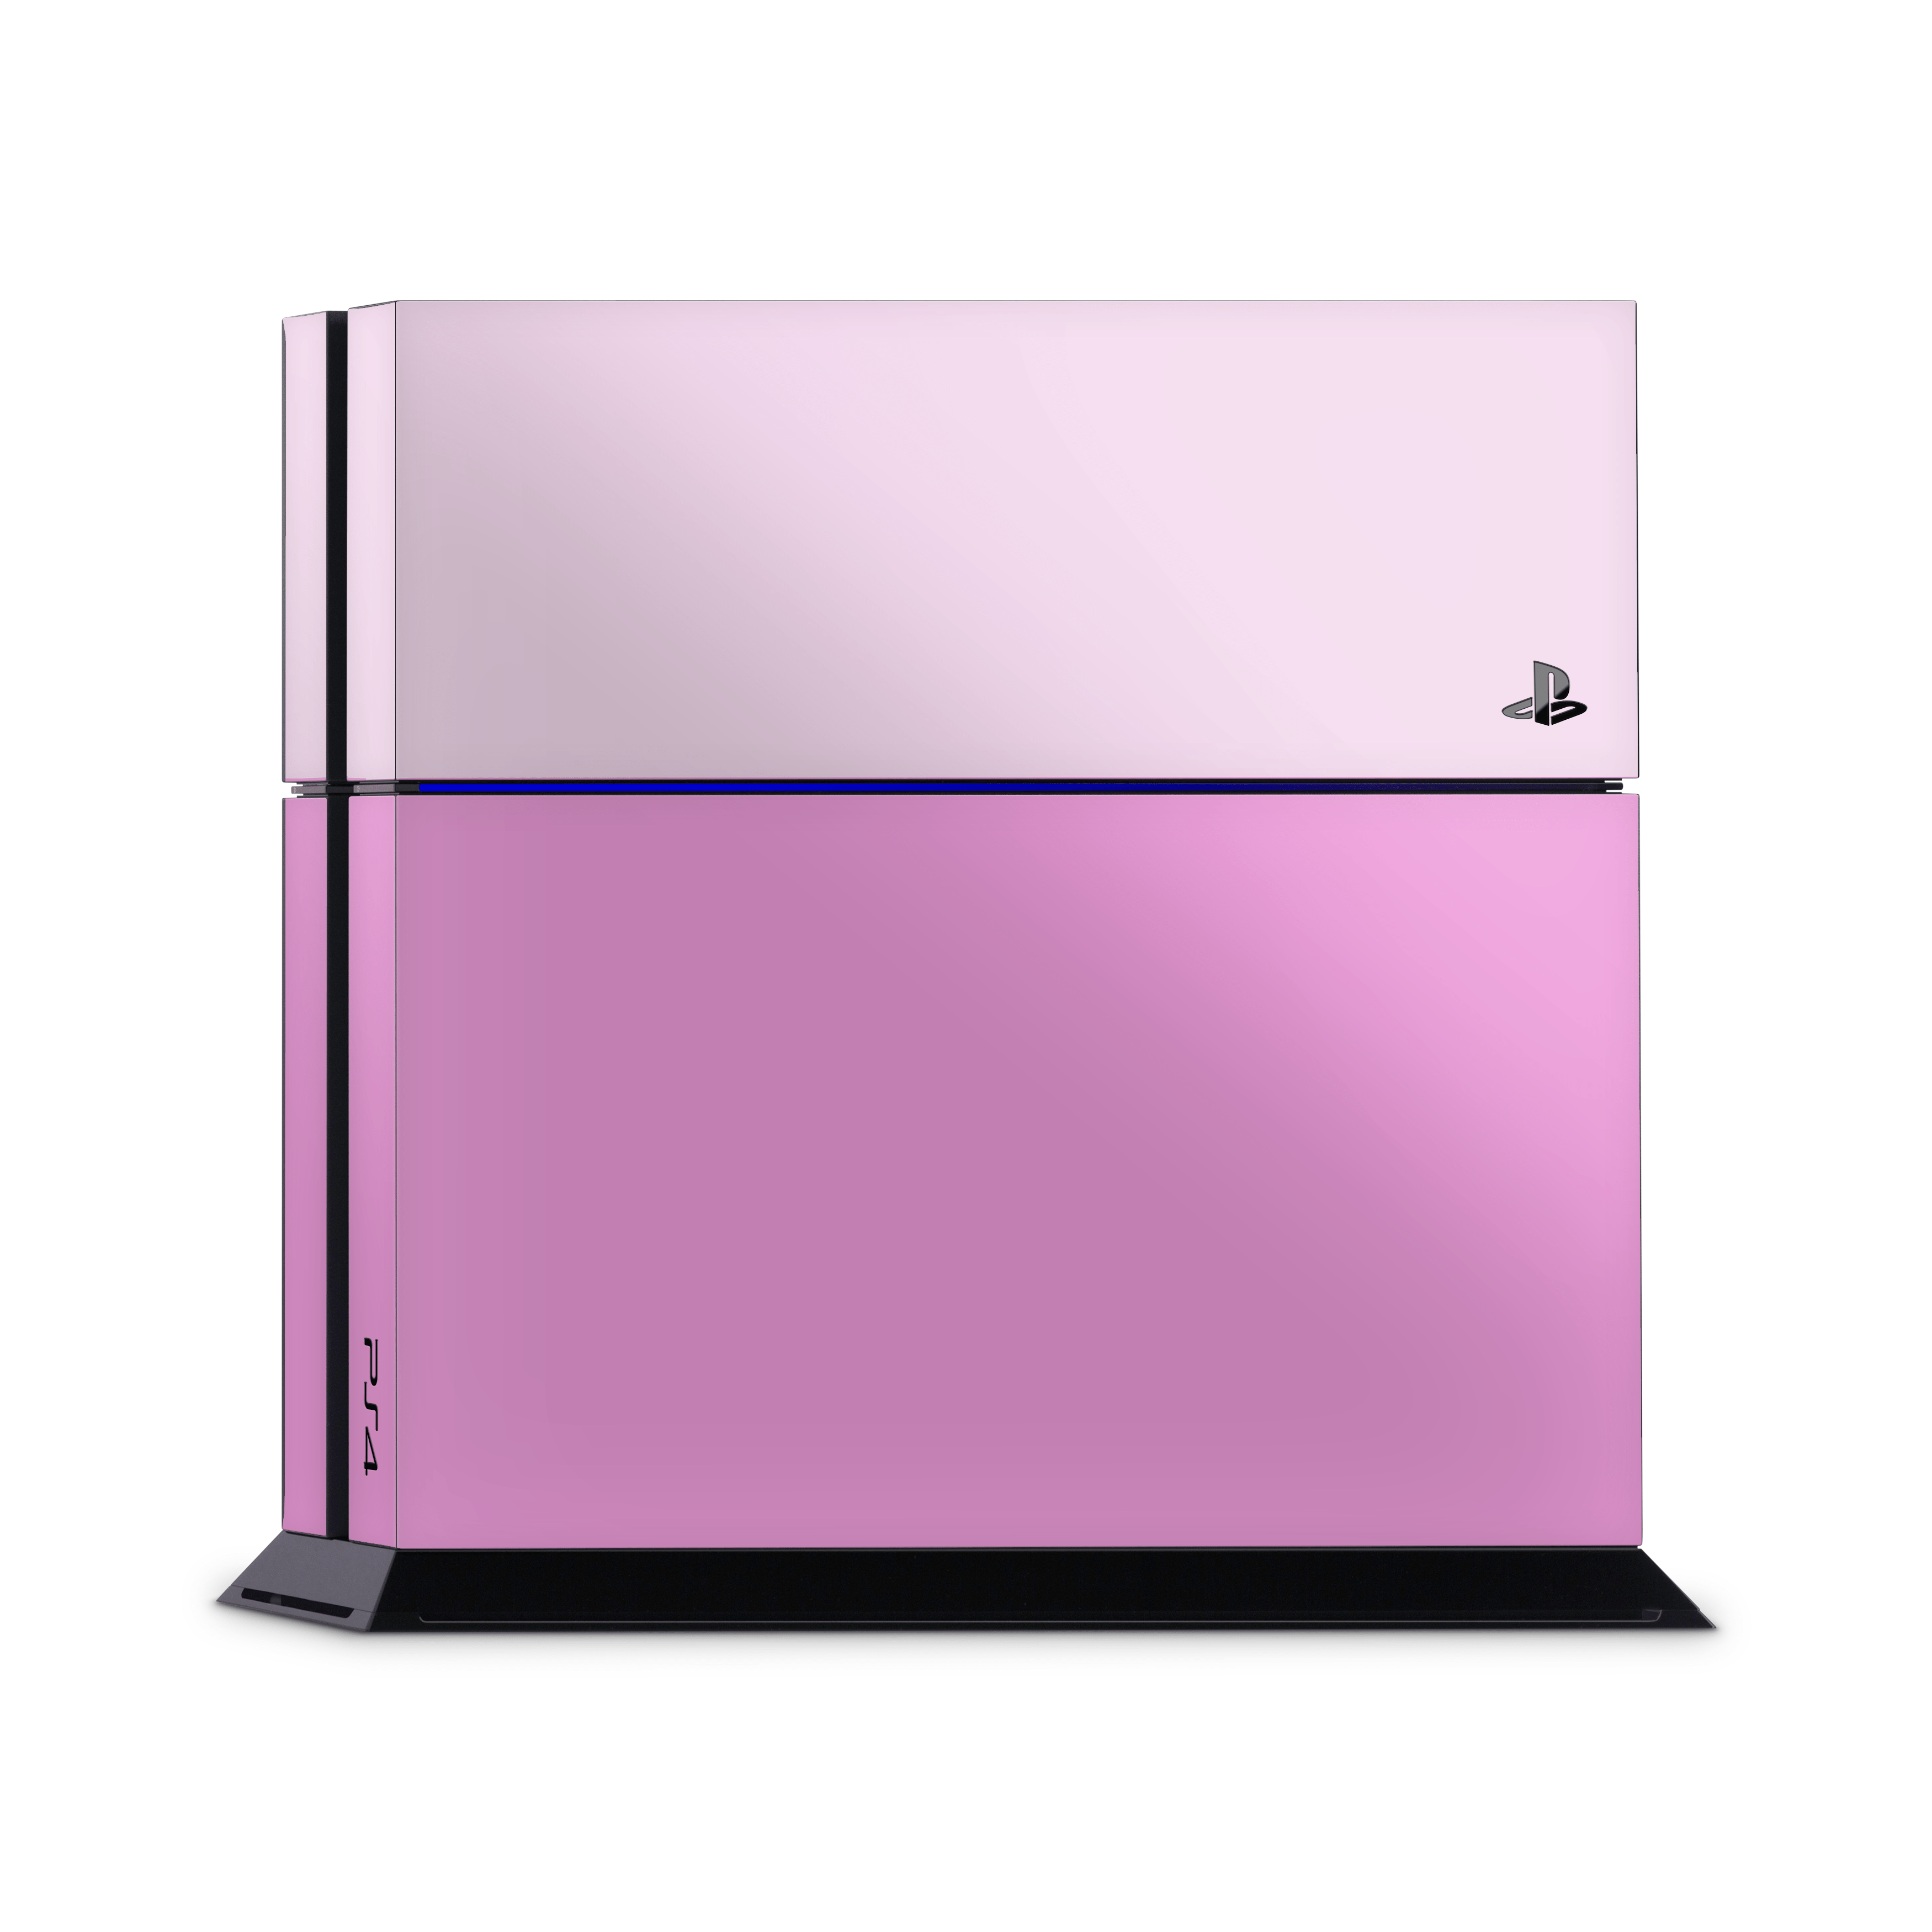 Shades of Rose PS4 | PS4 Pro | PS4 Slim Skins